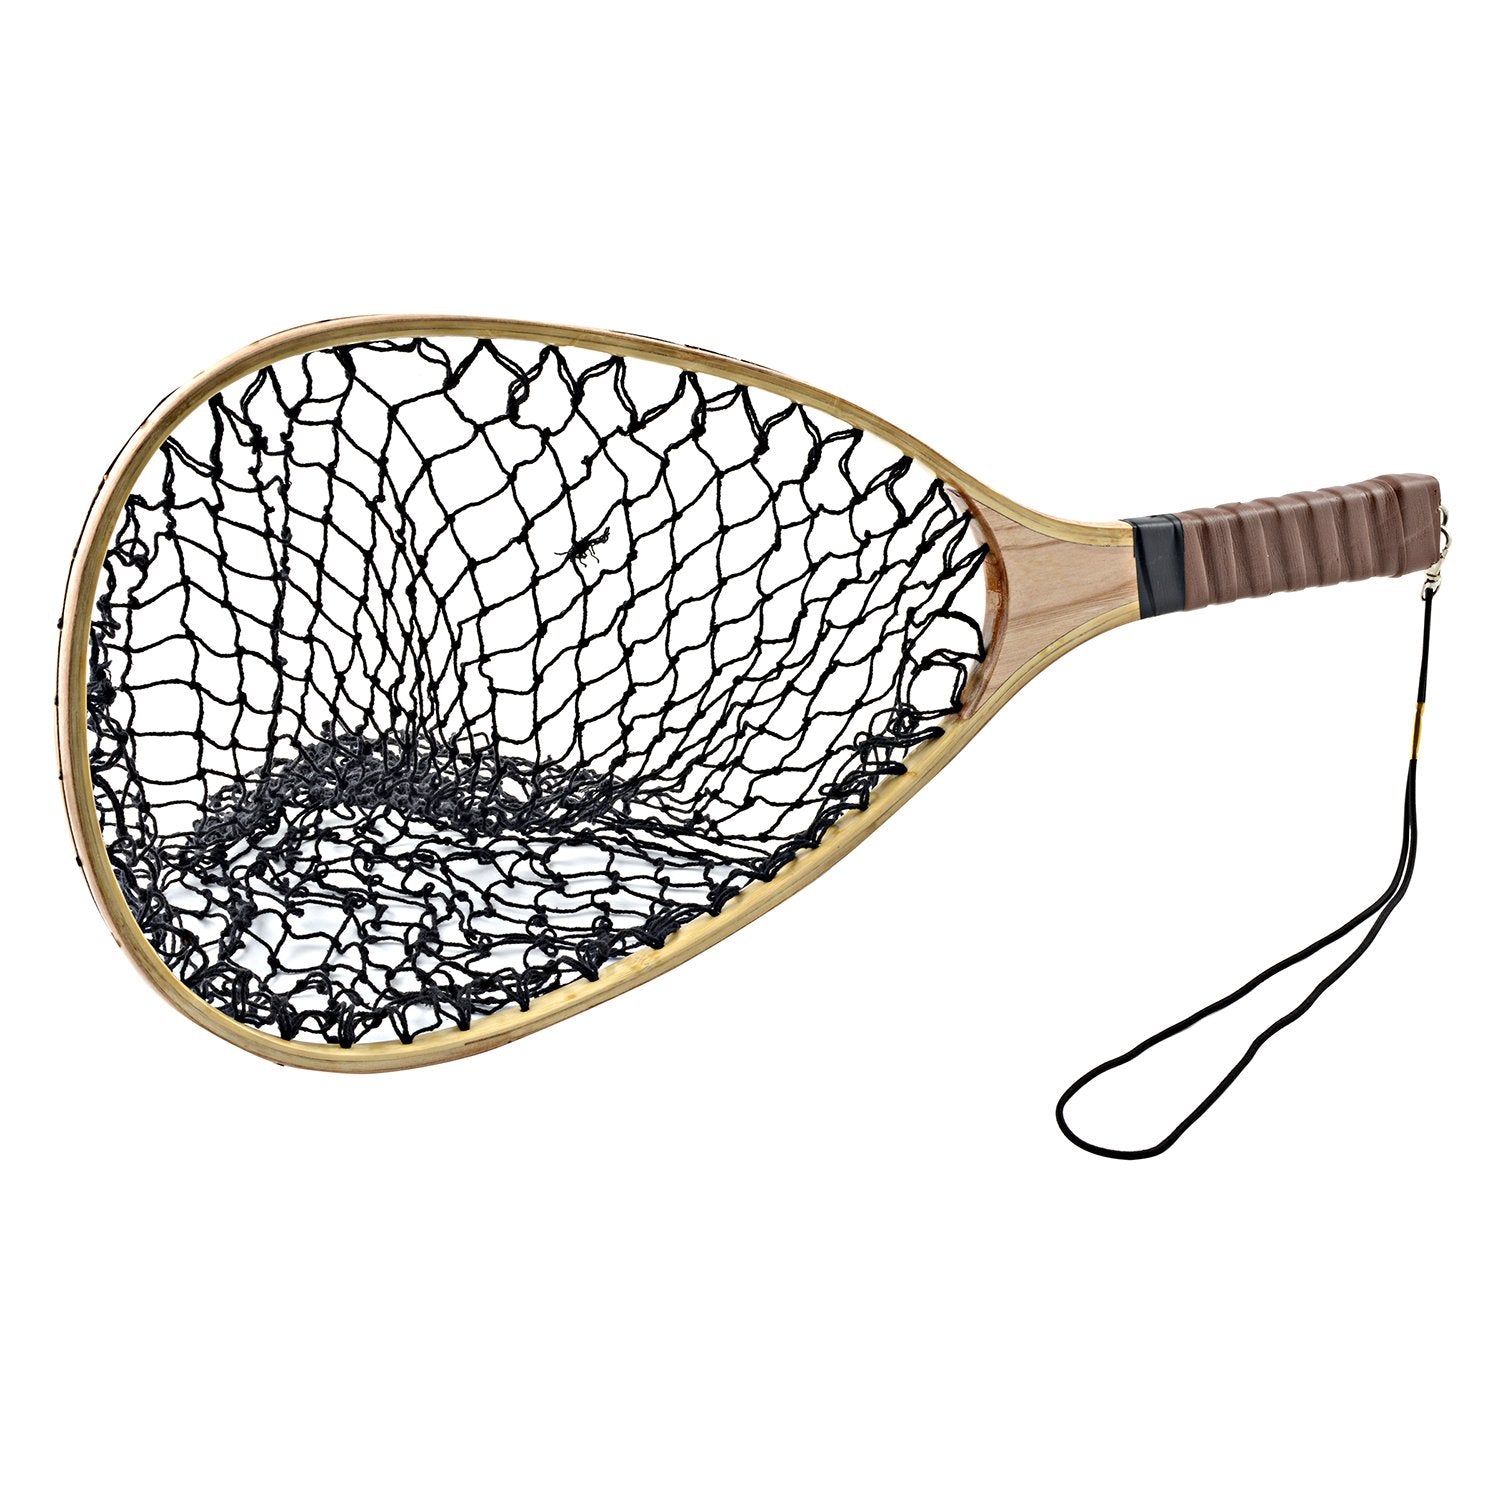 South Bend trout net